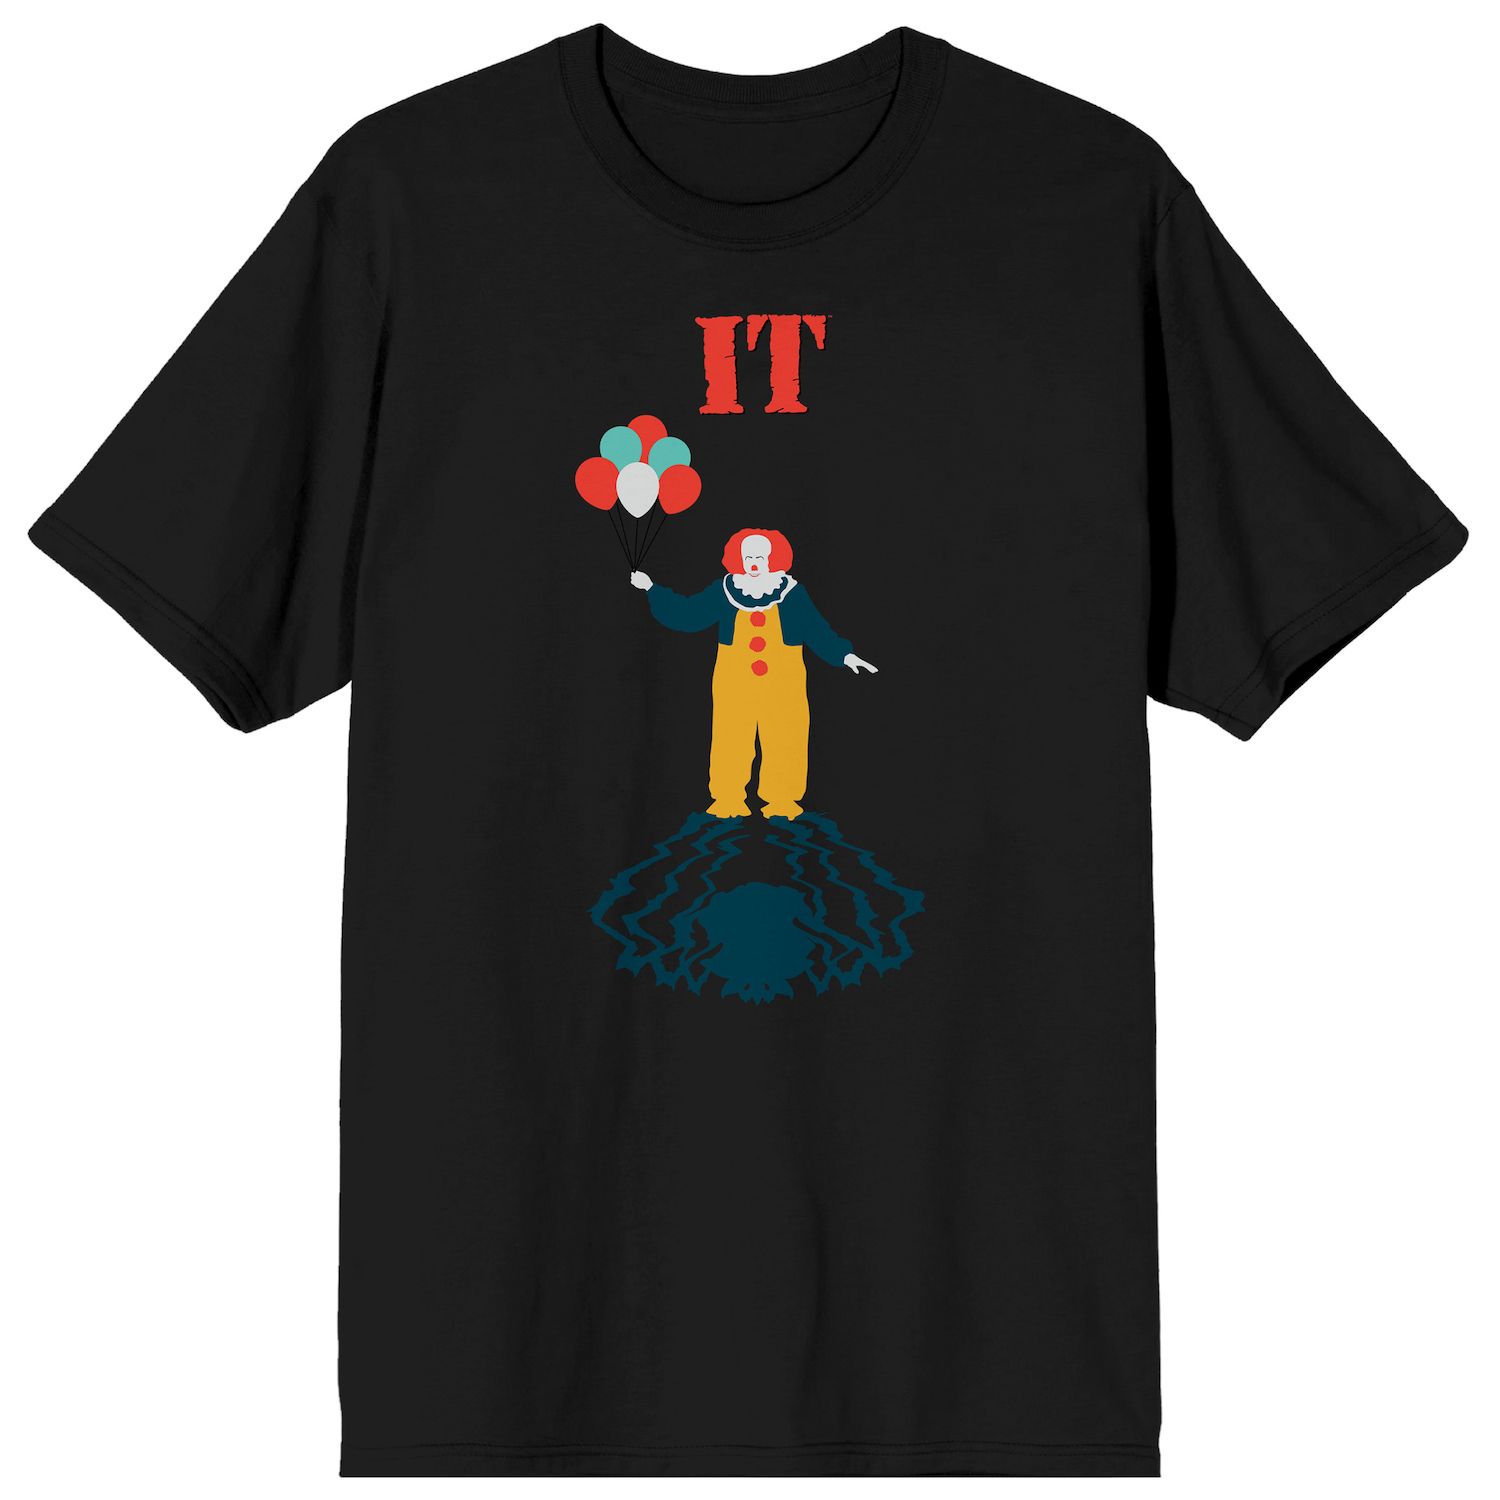 Мужская футболка It Pennywise с воздушными шарами Licensed Character